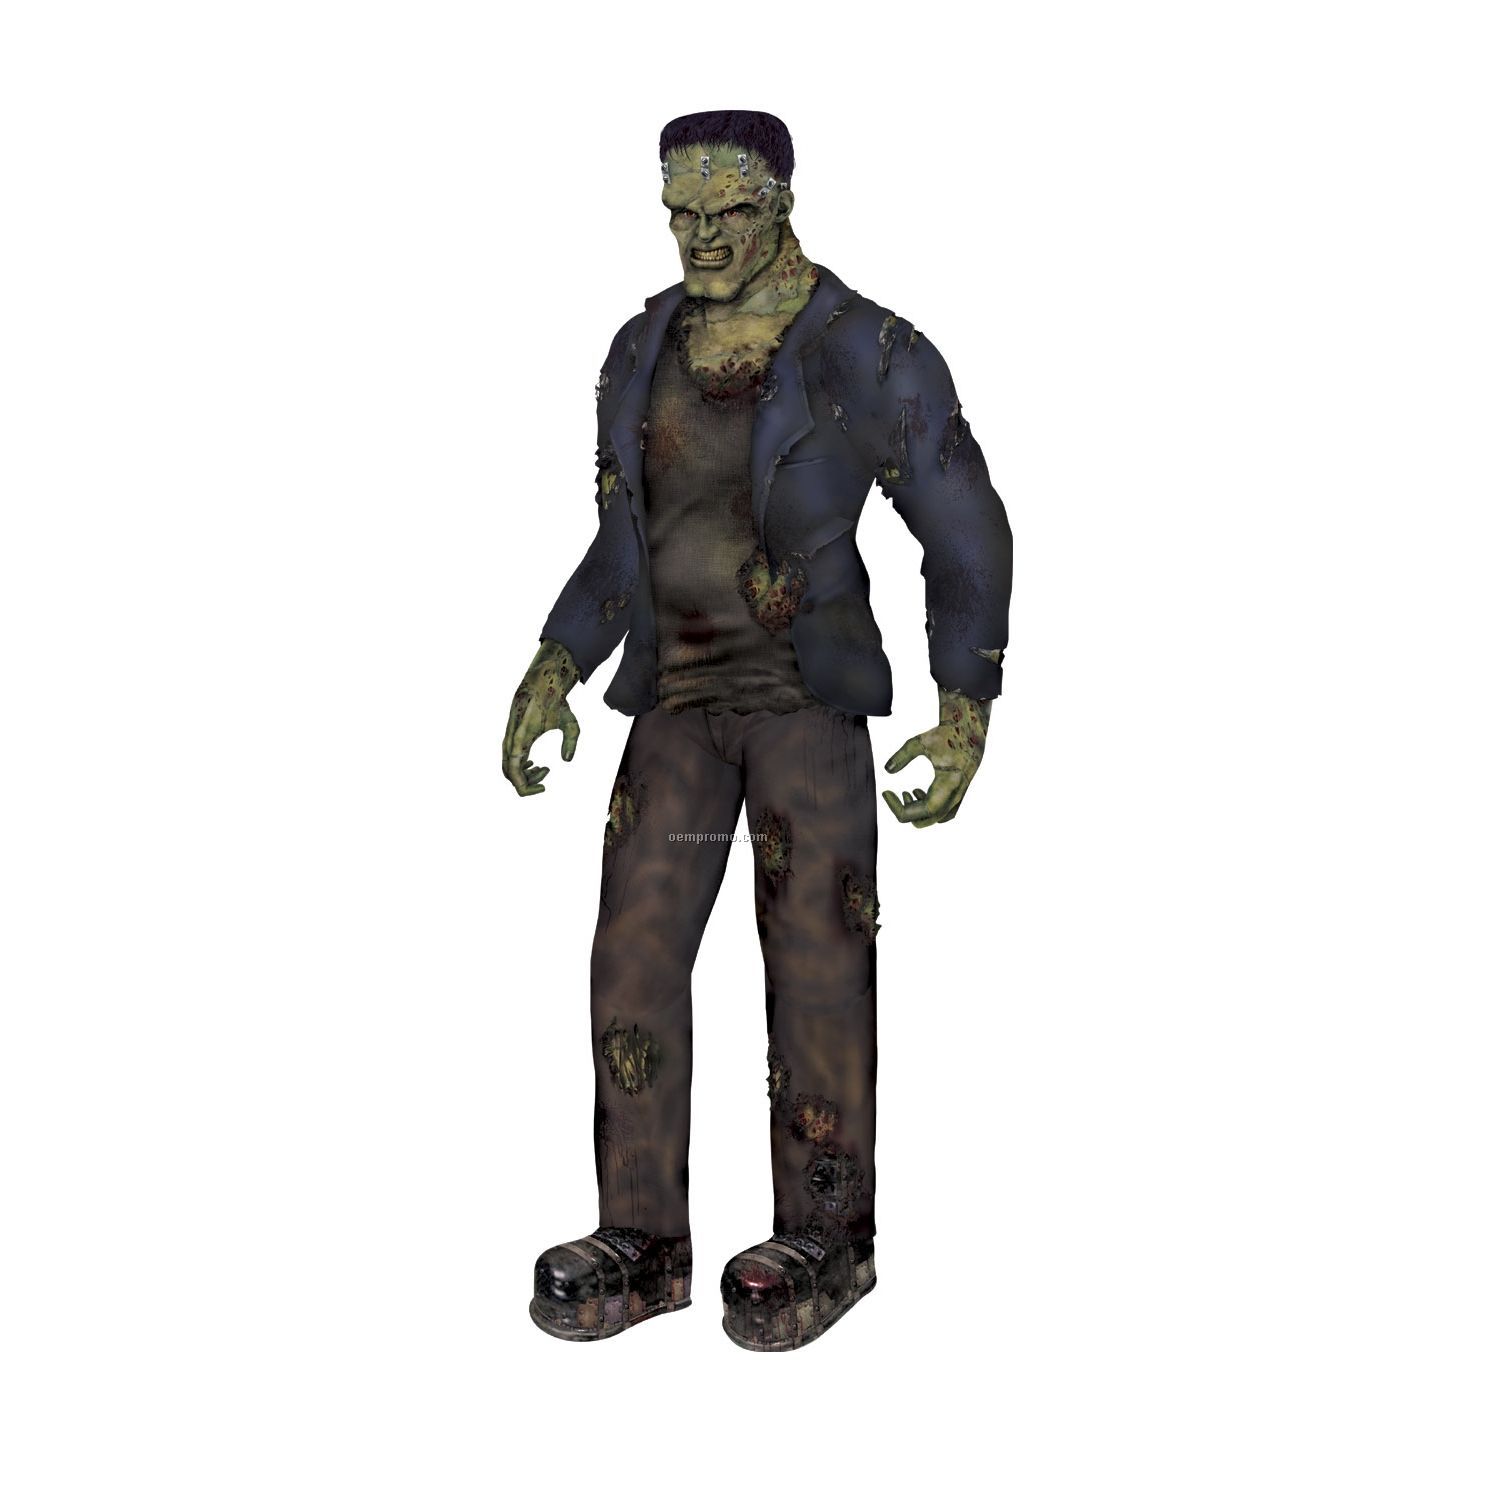 Jointed Frankenstein Figure